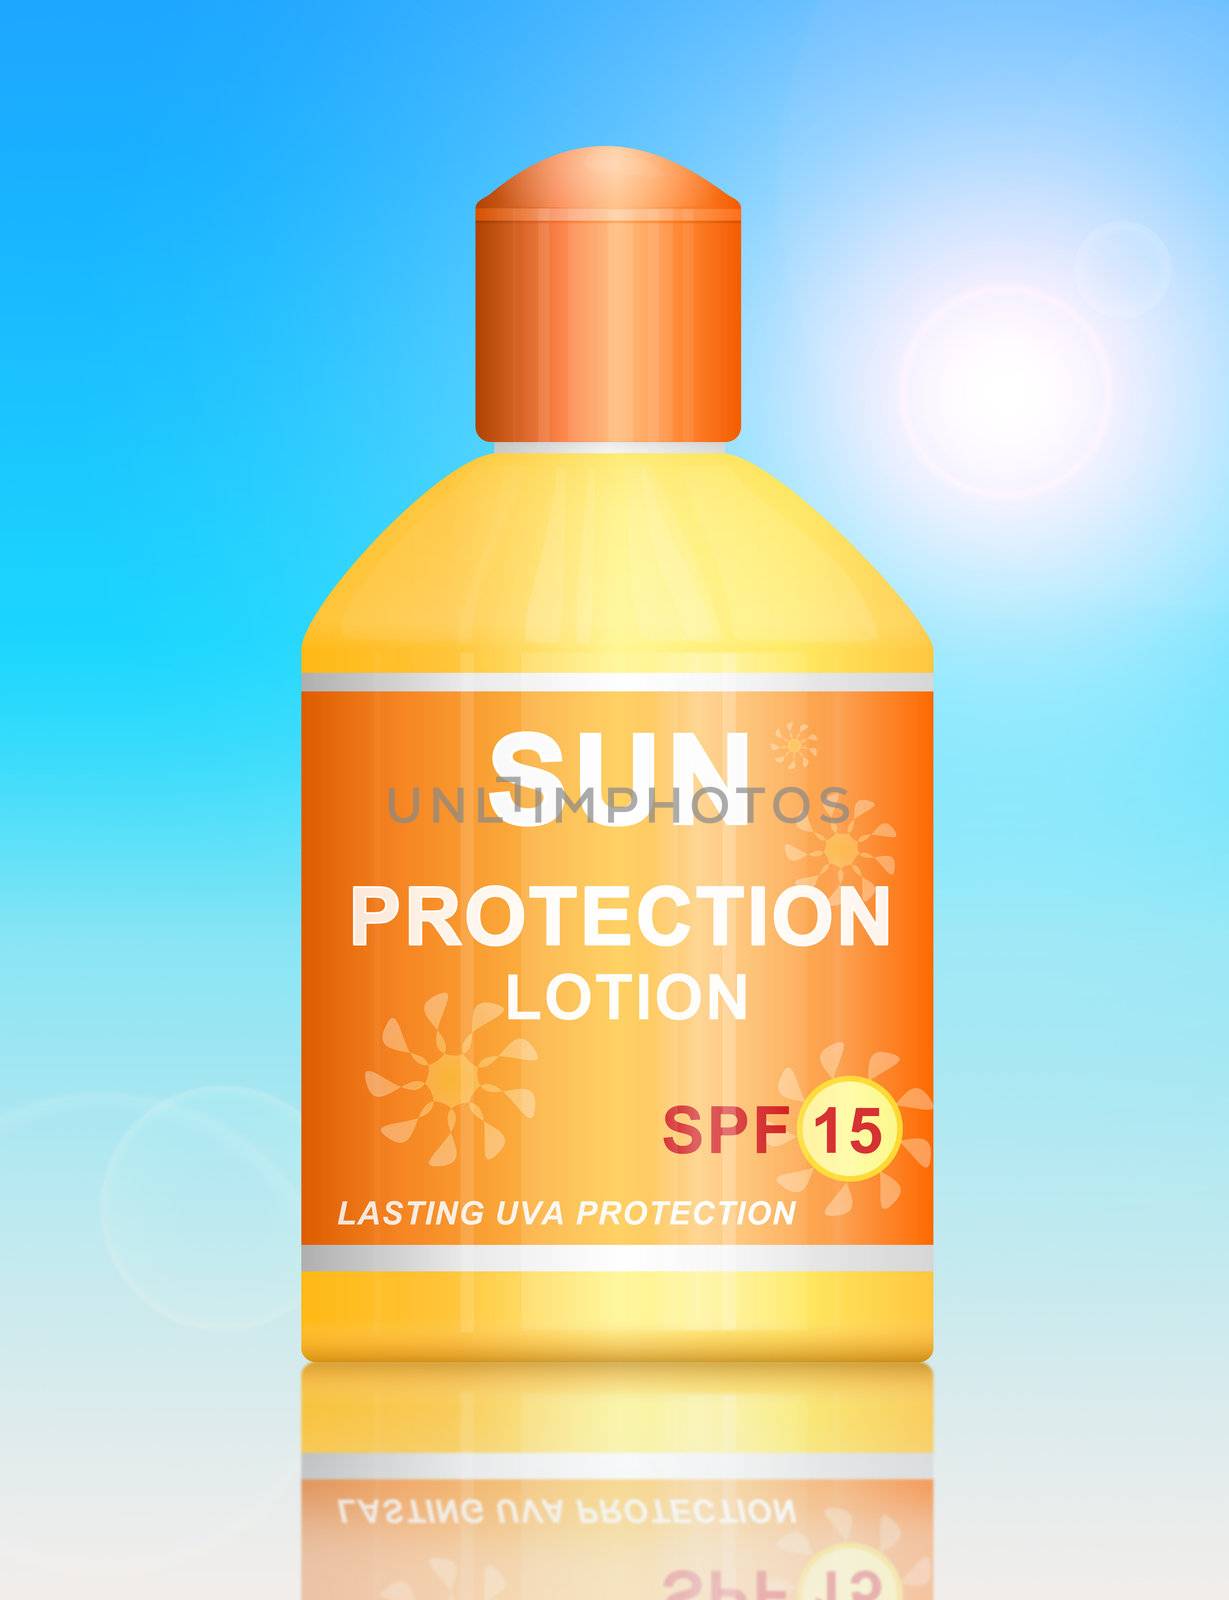 Illustration depicting a single uva SPF 15 sun protection lotion bottle arranged over vibrant blue light effect background.